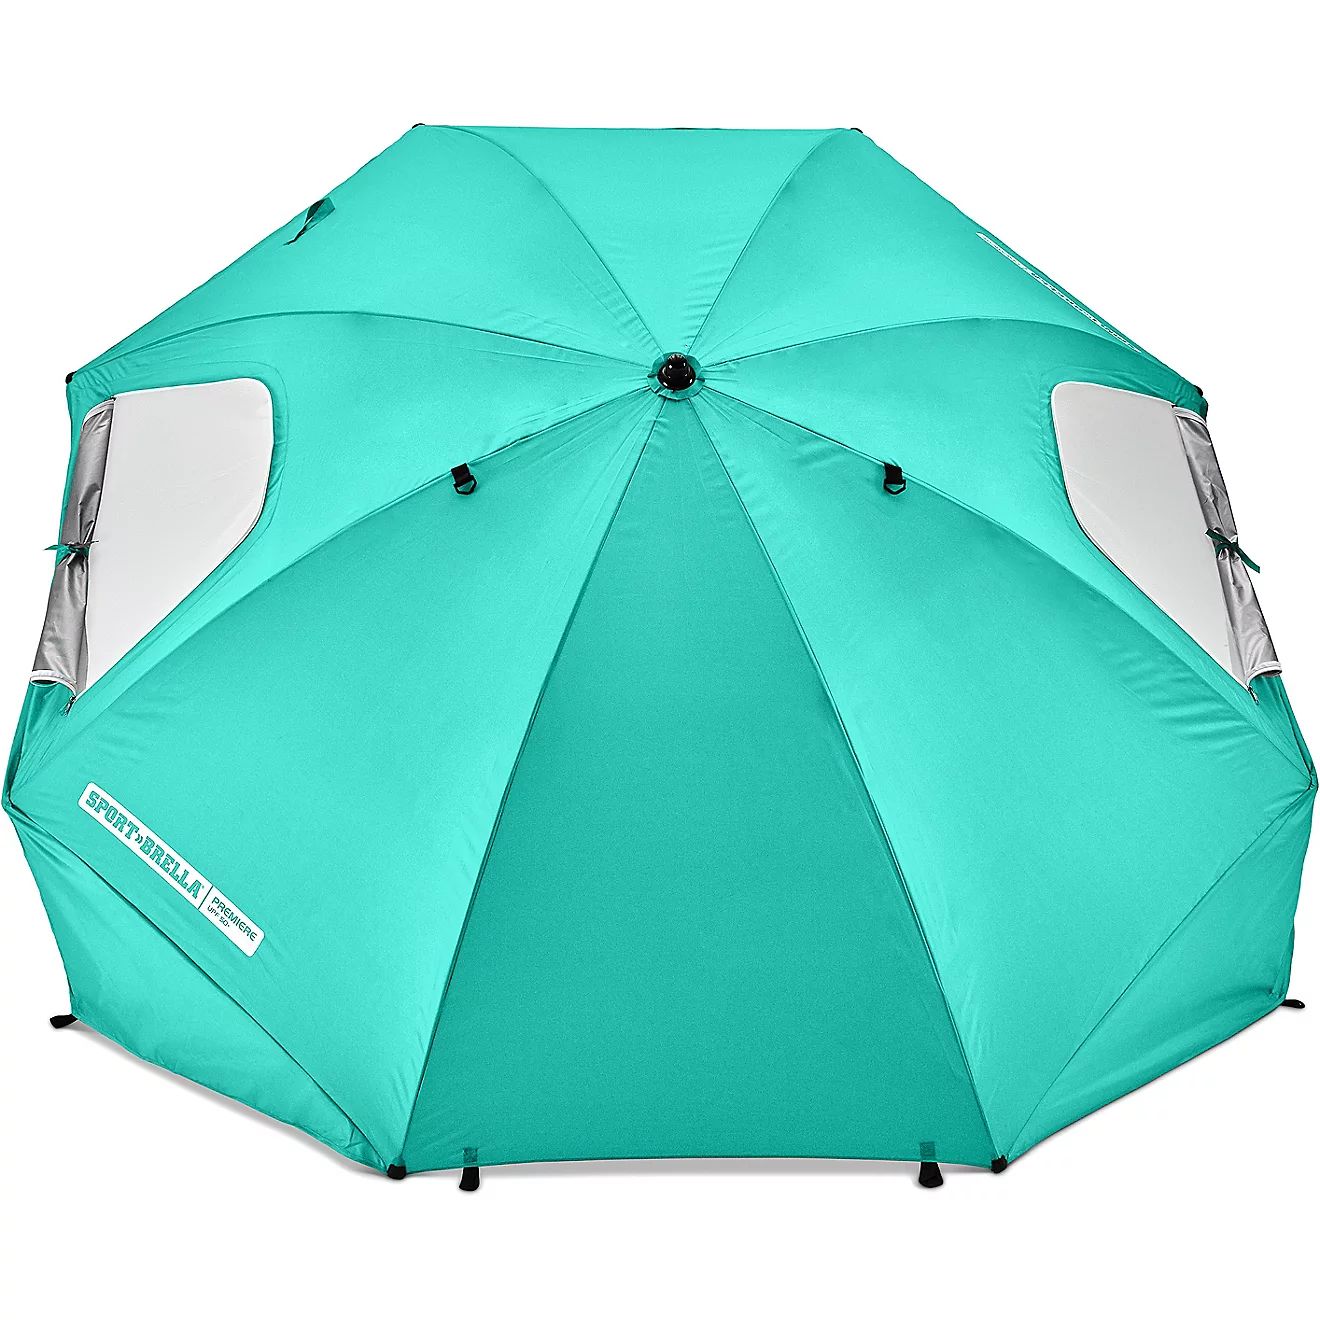 Sport-Brella Premiere Seafoam Umbrella | Free Shipping at Academy | Academy Sports + Outdoors